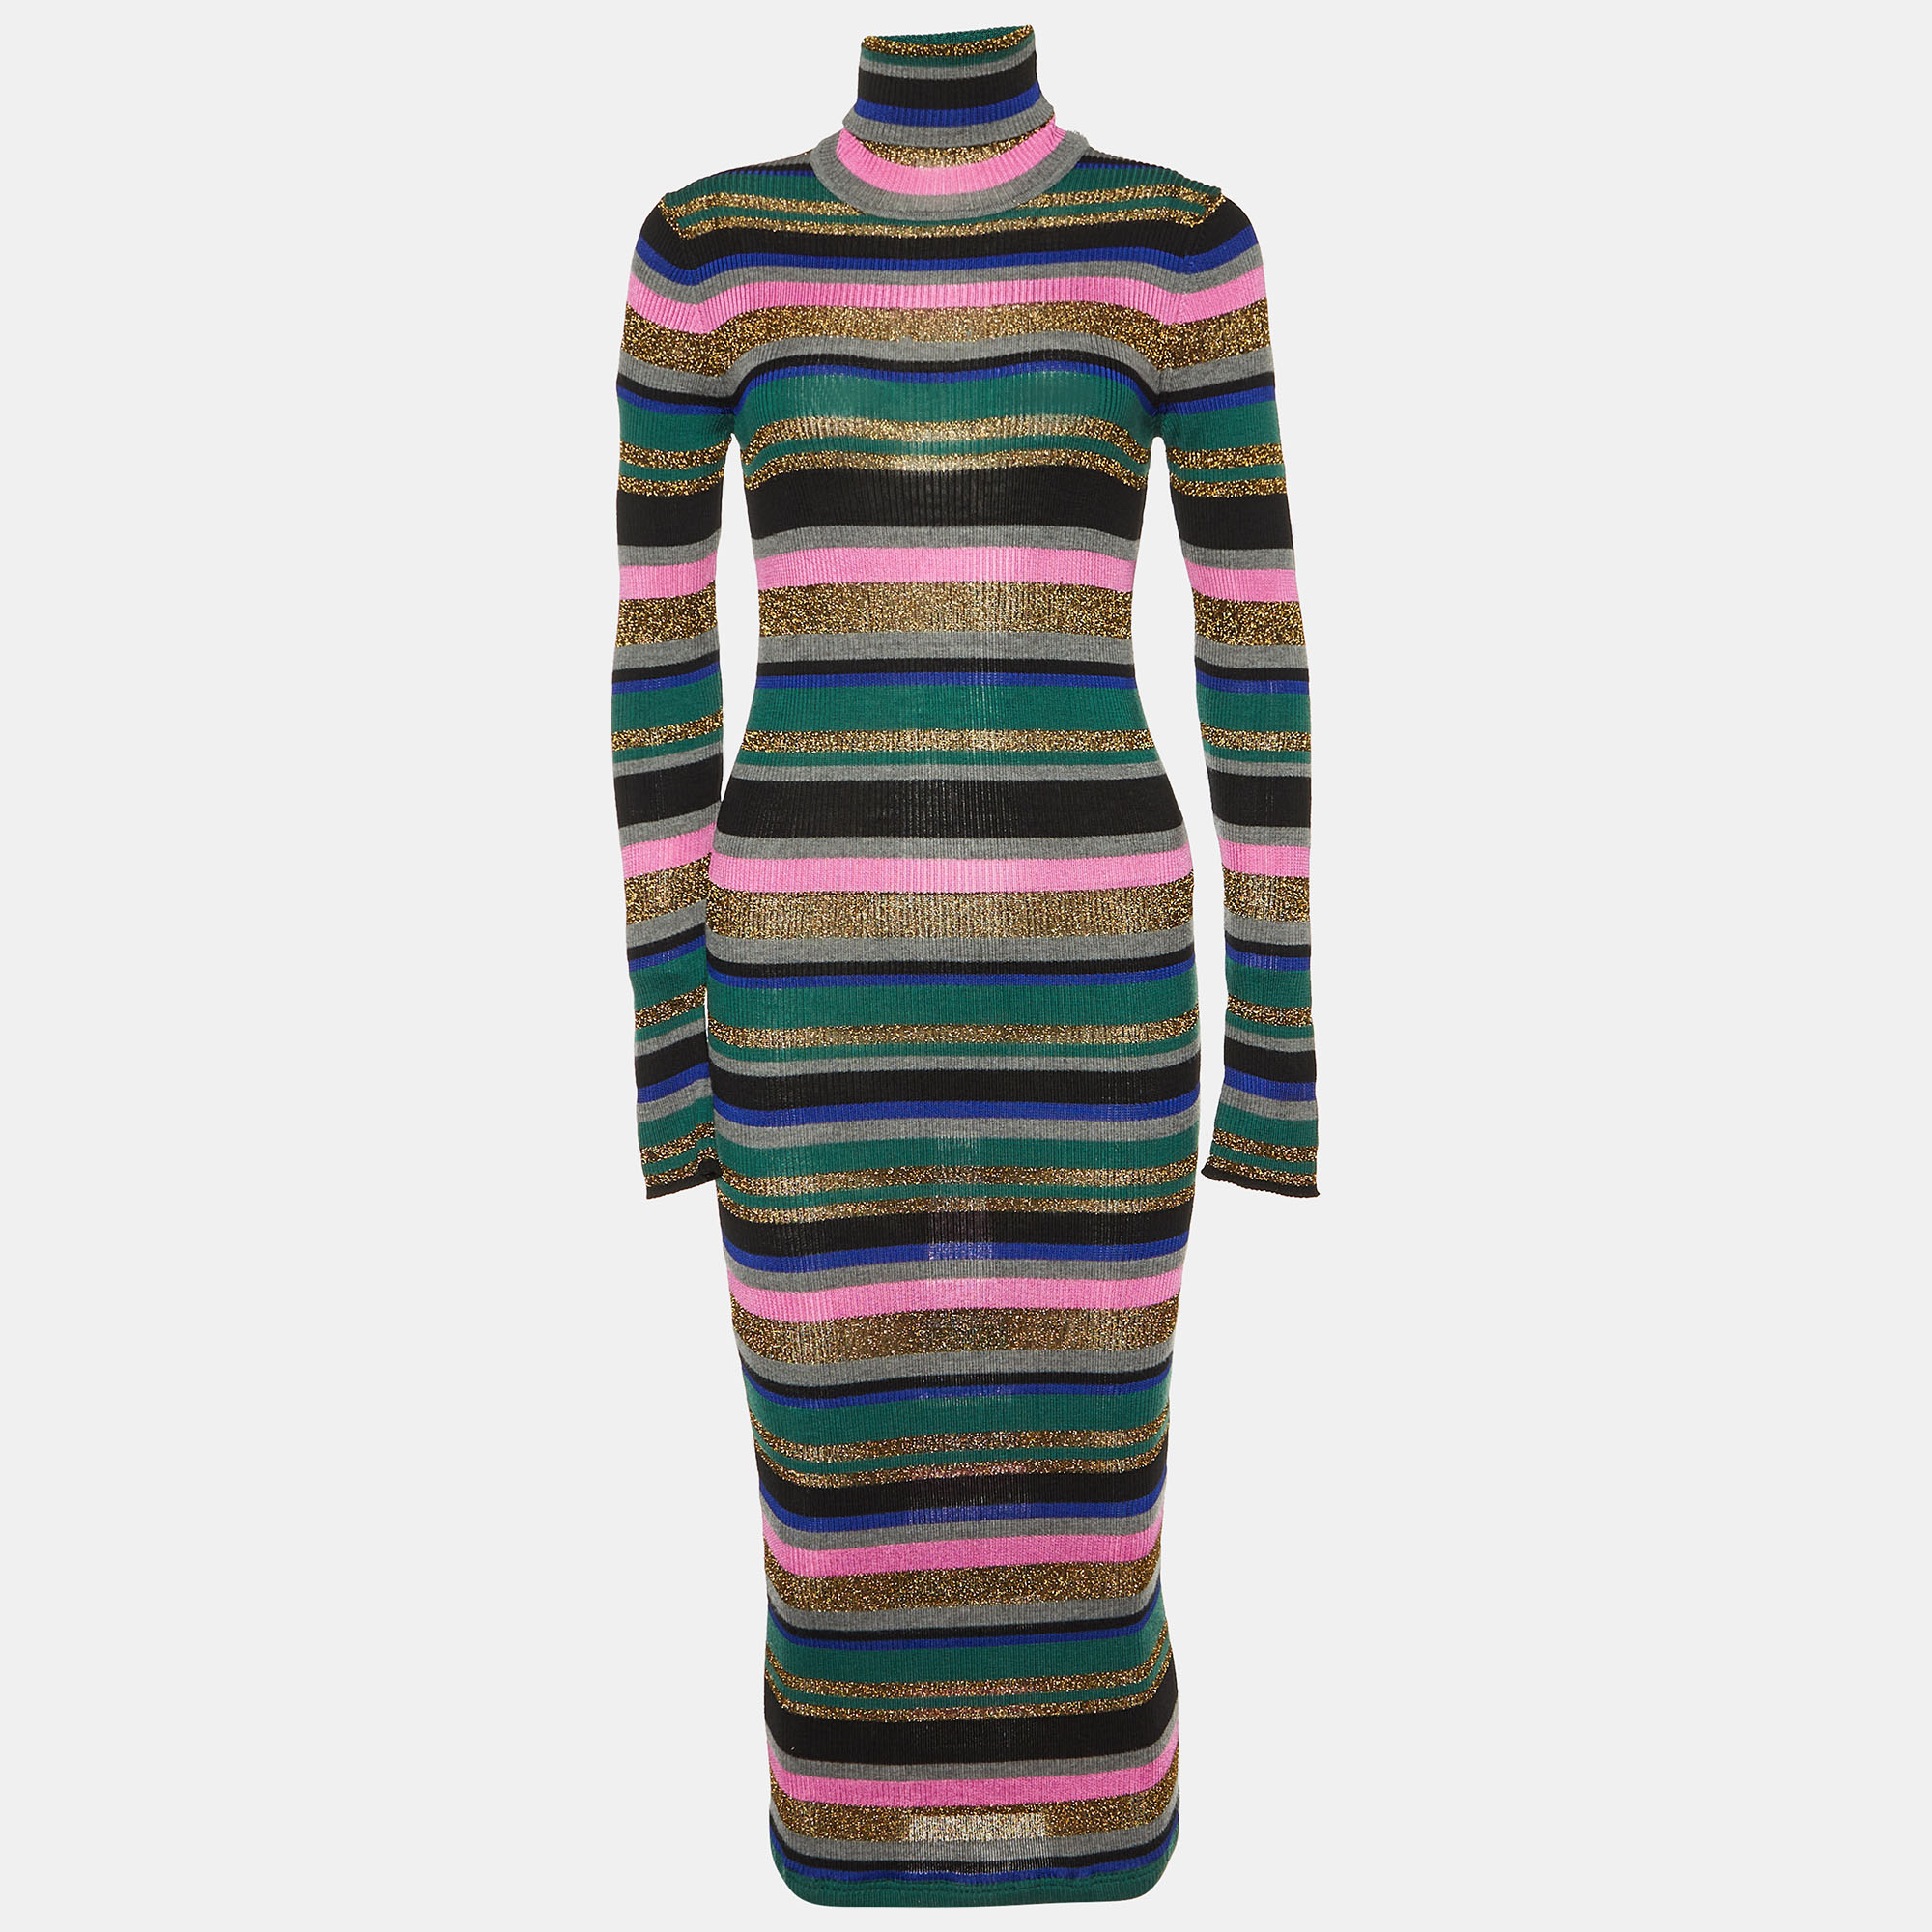 Emilio pucci multicolor striped lurex knit turtleneck dress m